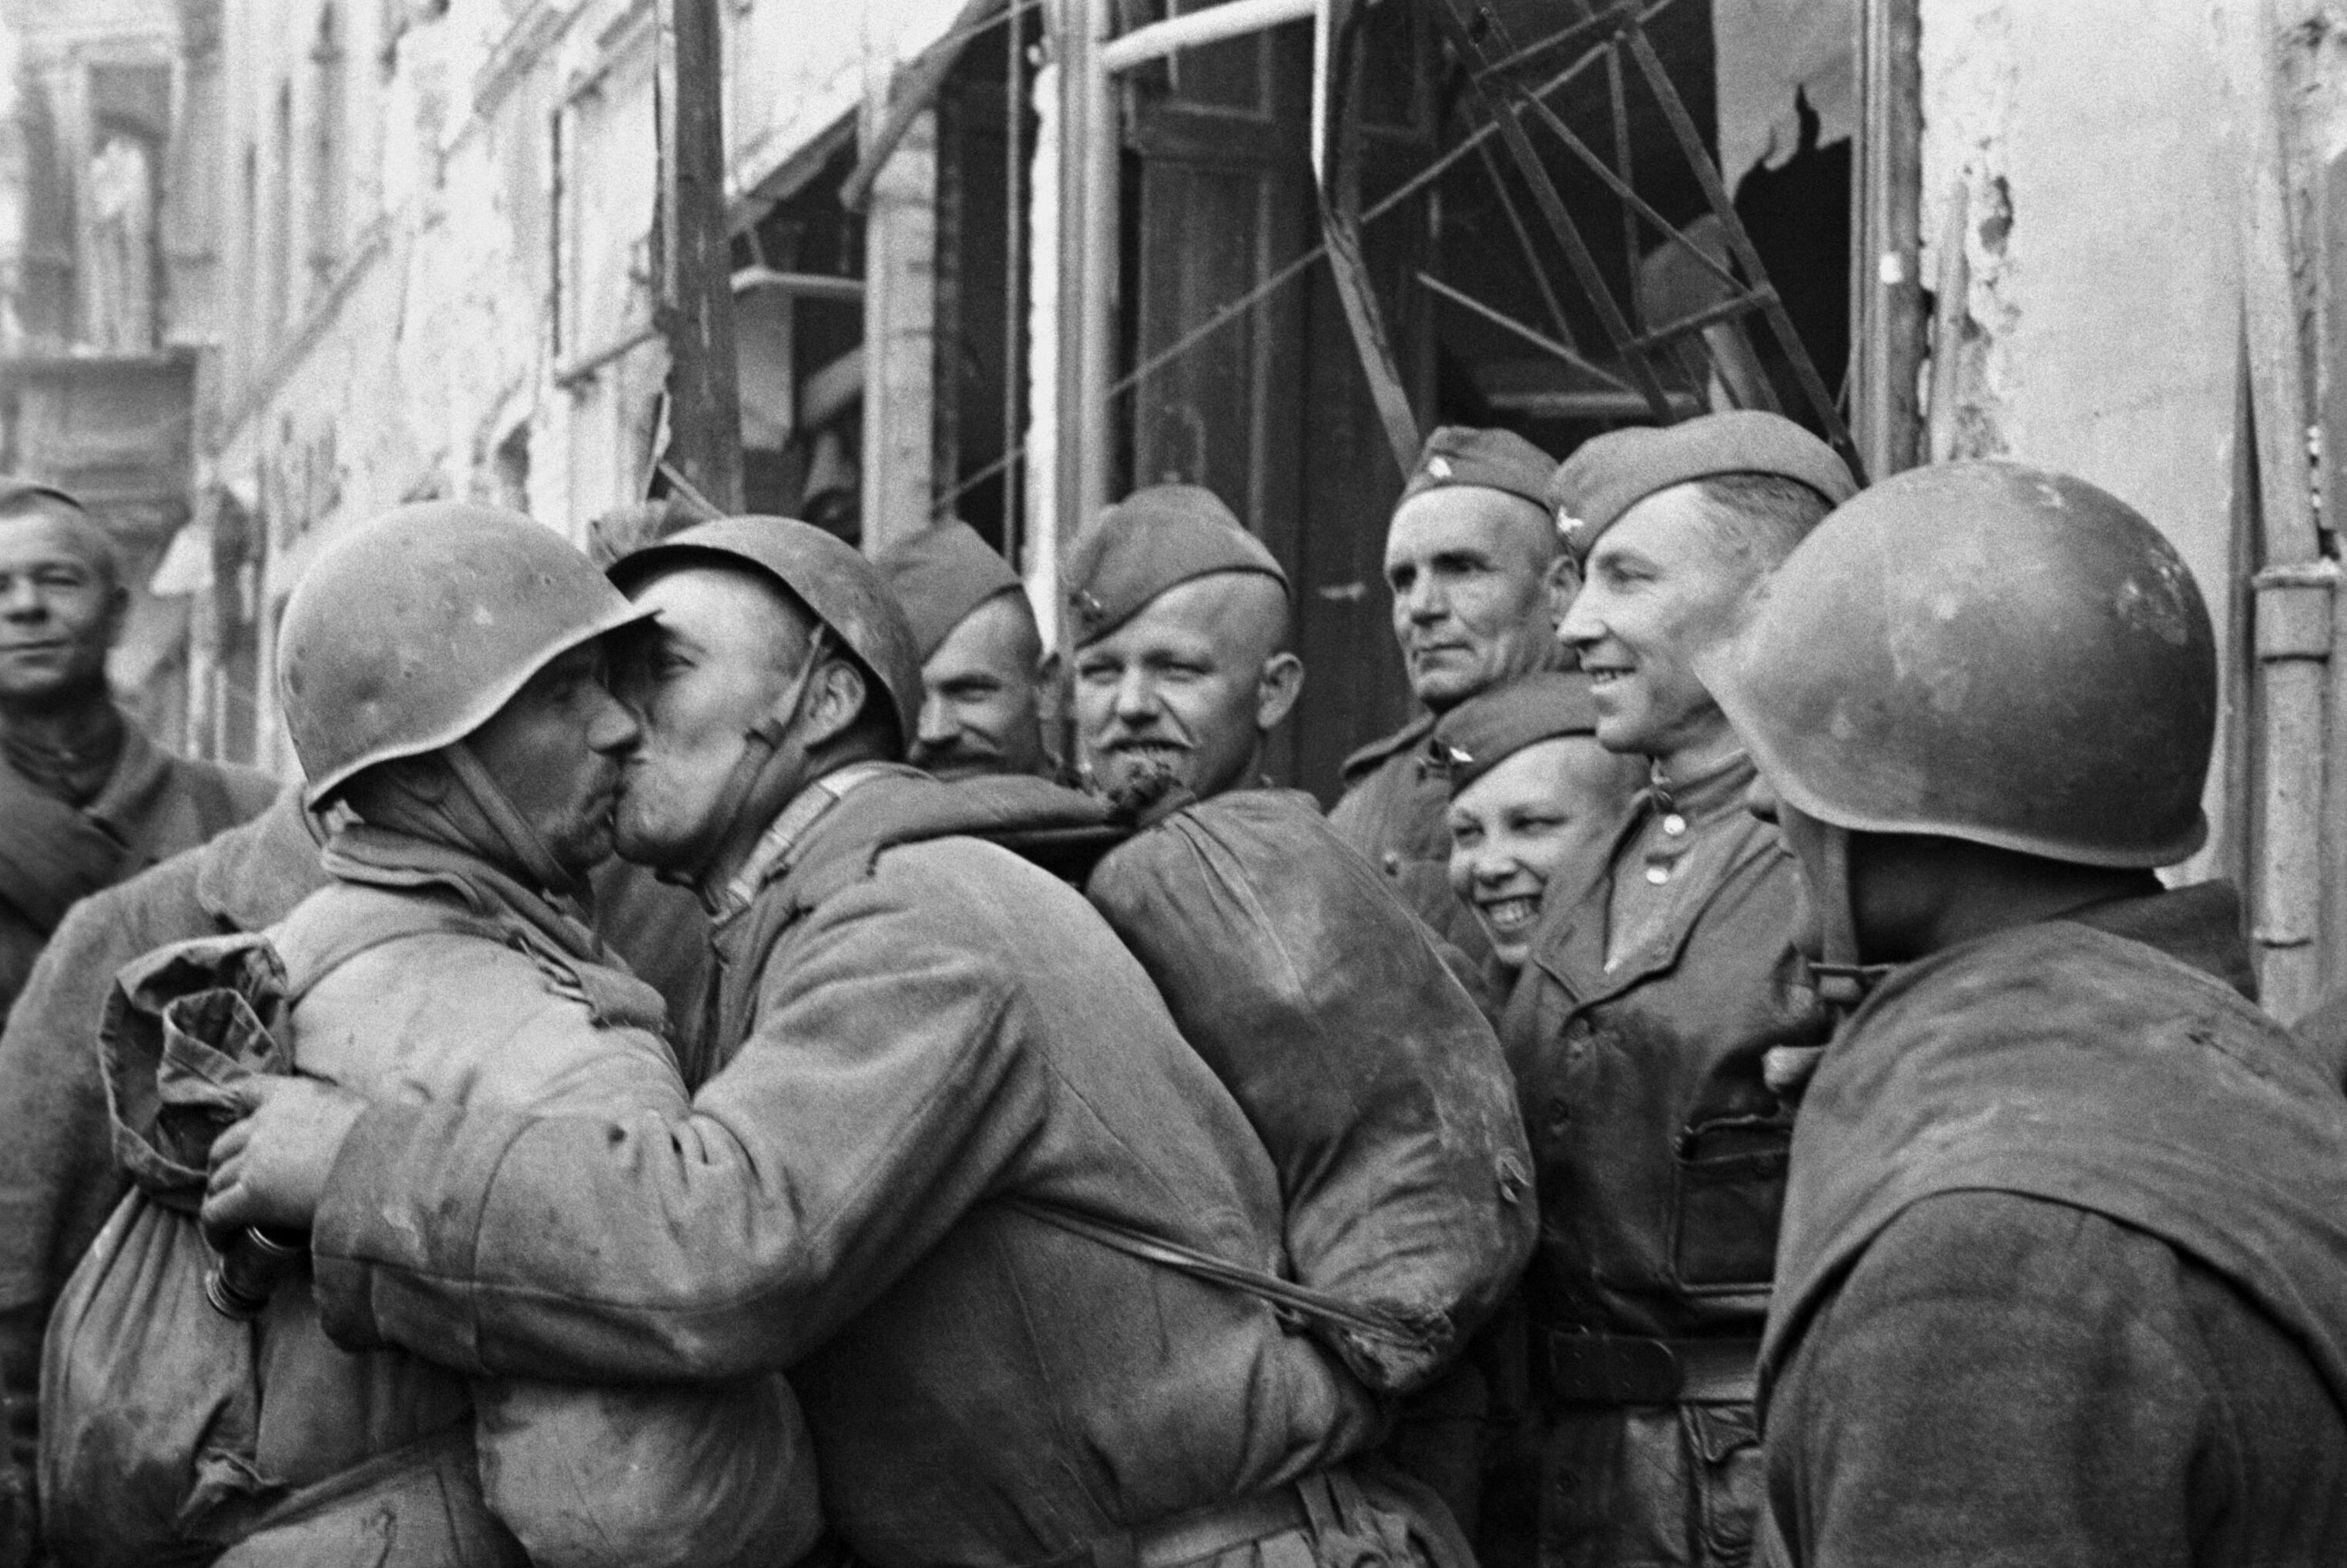 Берлин 5 мая какой год. РККА В Берлине 1945. Солдаты красной армии 1945 Берлин. Советские солдаты в Берлине 1945.